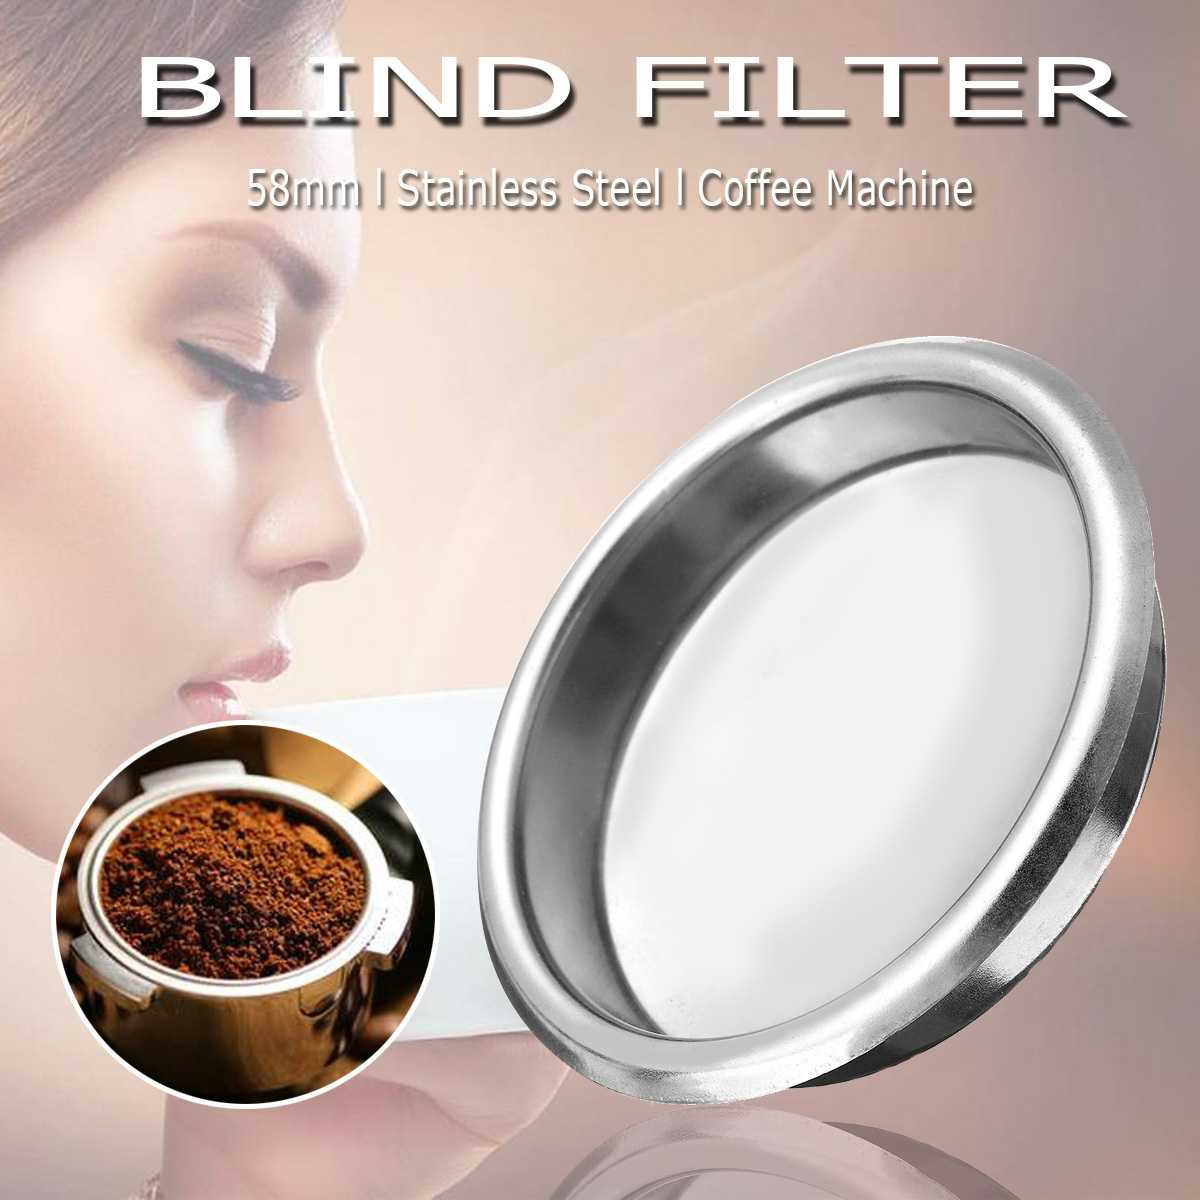 58mm Stainless Steel Blind Filter Espresso Coffee Machine Maker Backflush Flush Basket 12